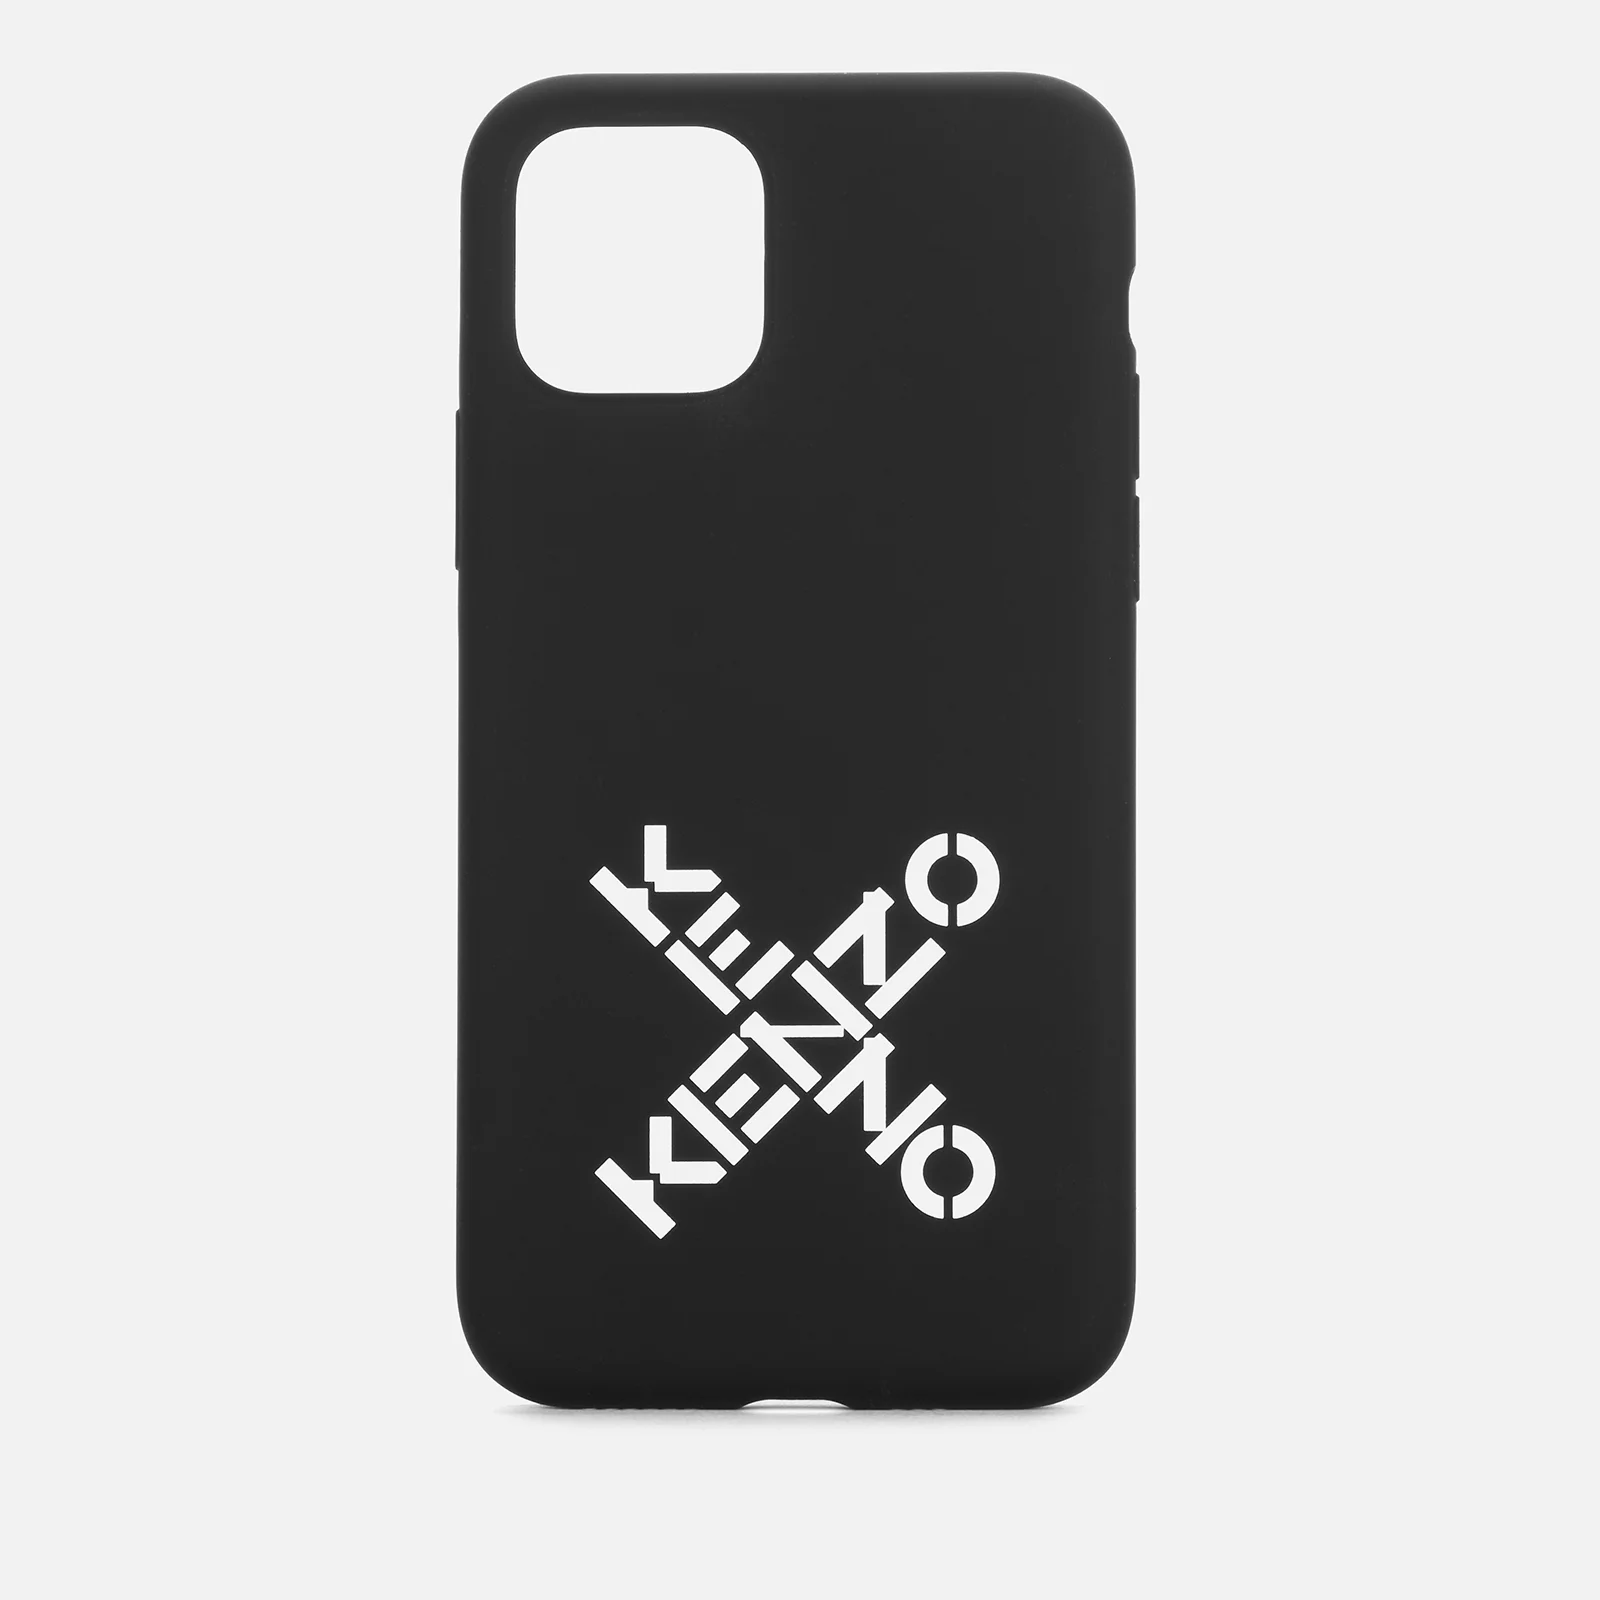 KENZO Men's Sport iPhone 11 Pro Phone Case - Black Image 1